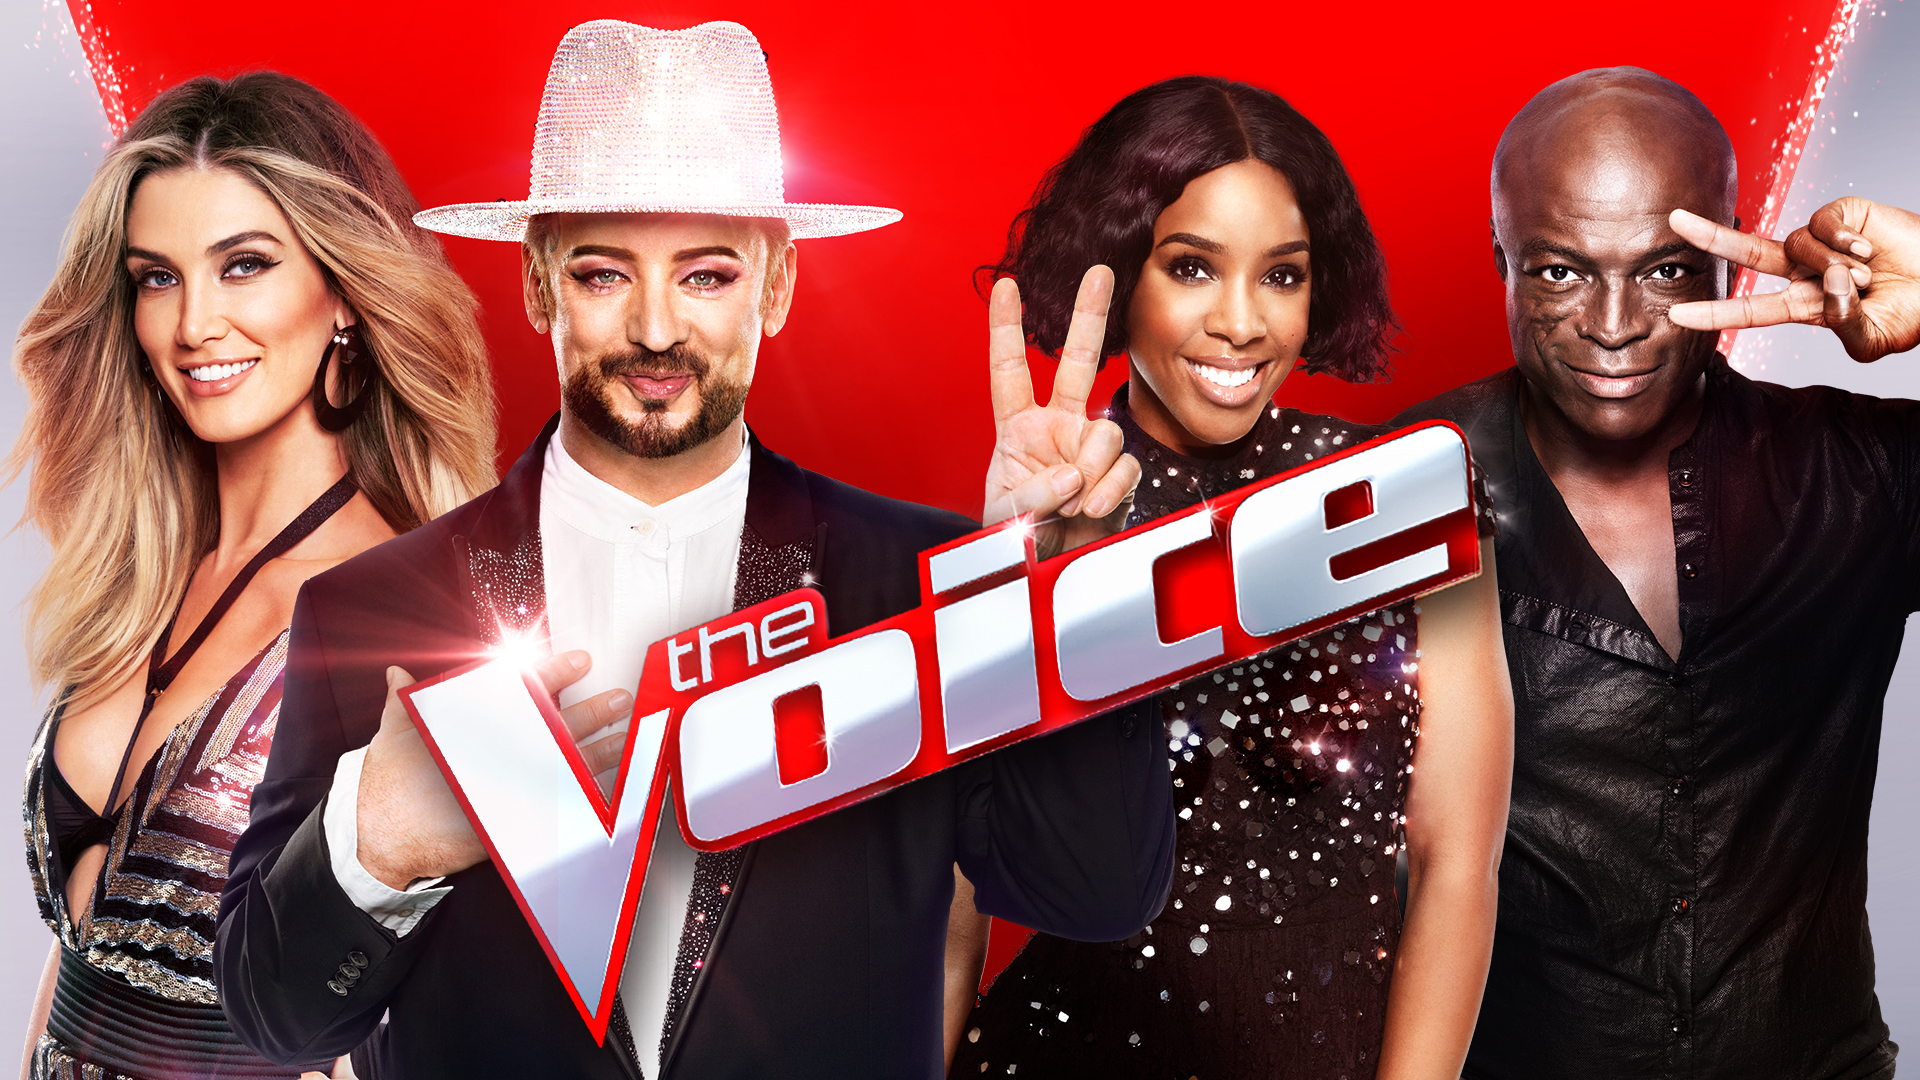 Voice. The Voice Australia судьи. Наставники британского шоу the Voice 2017. The Voice Australia 2019 судьи. Жюри Voice.